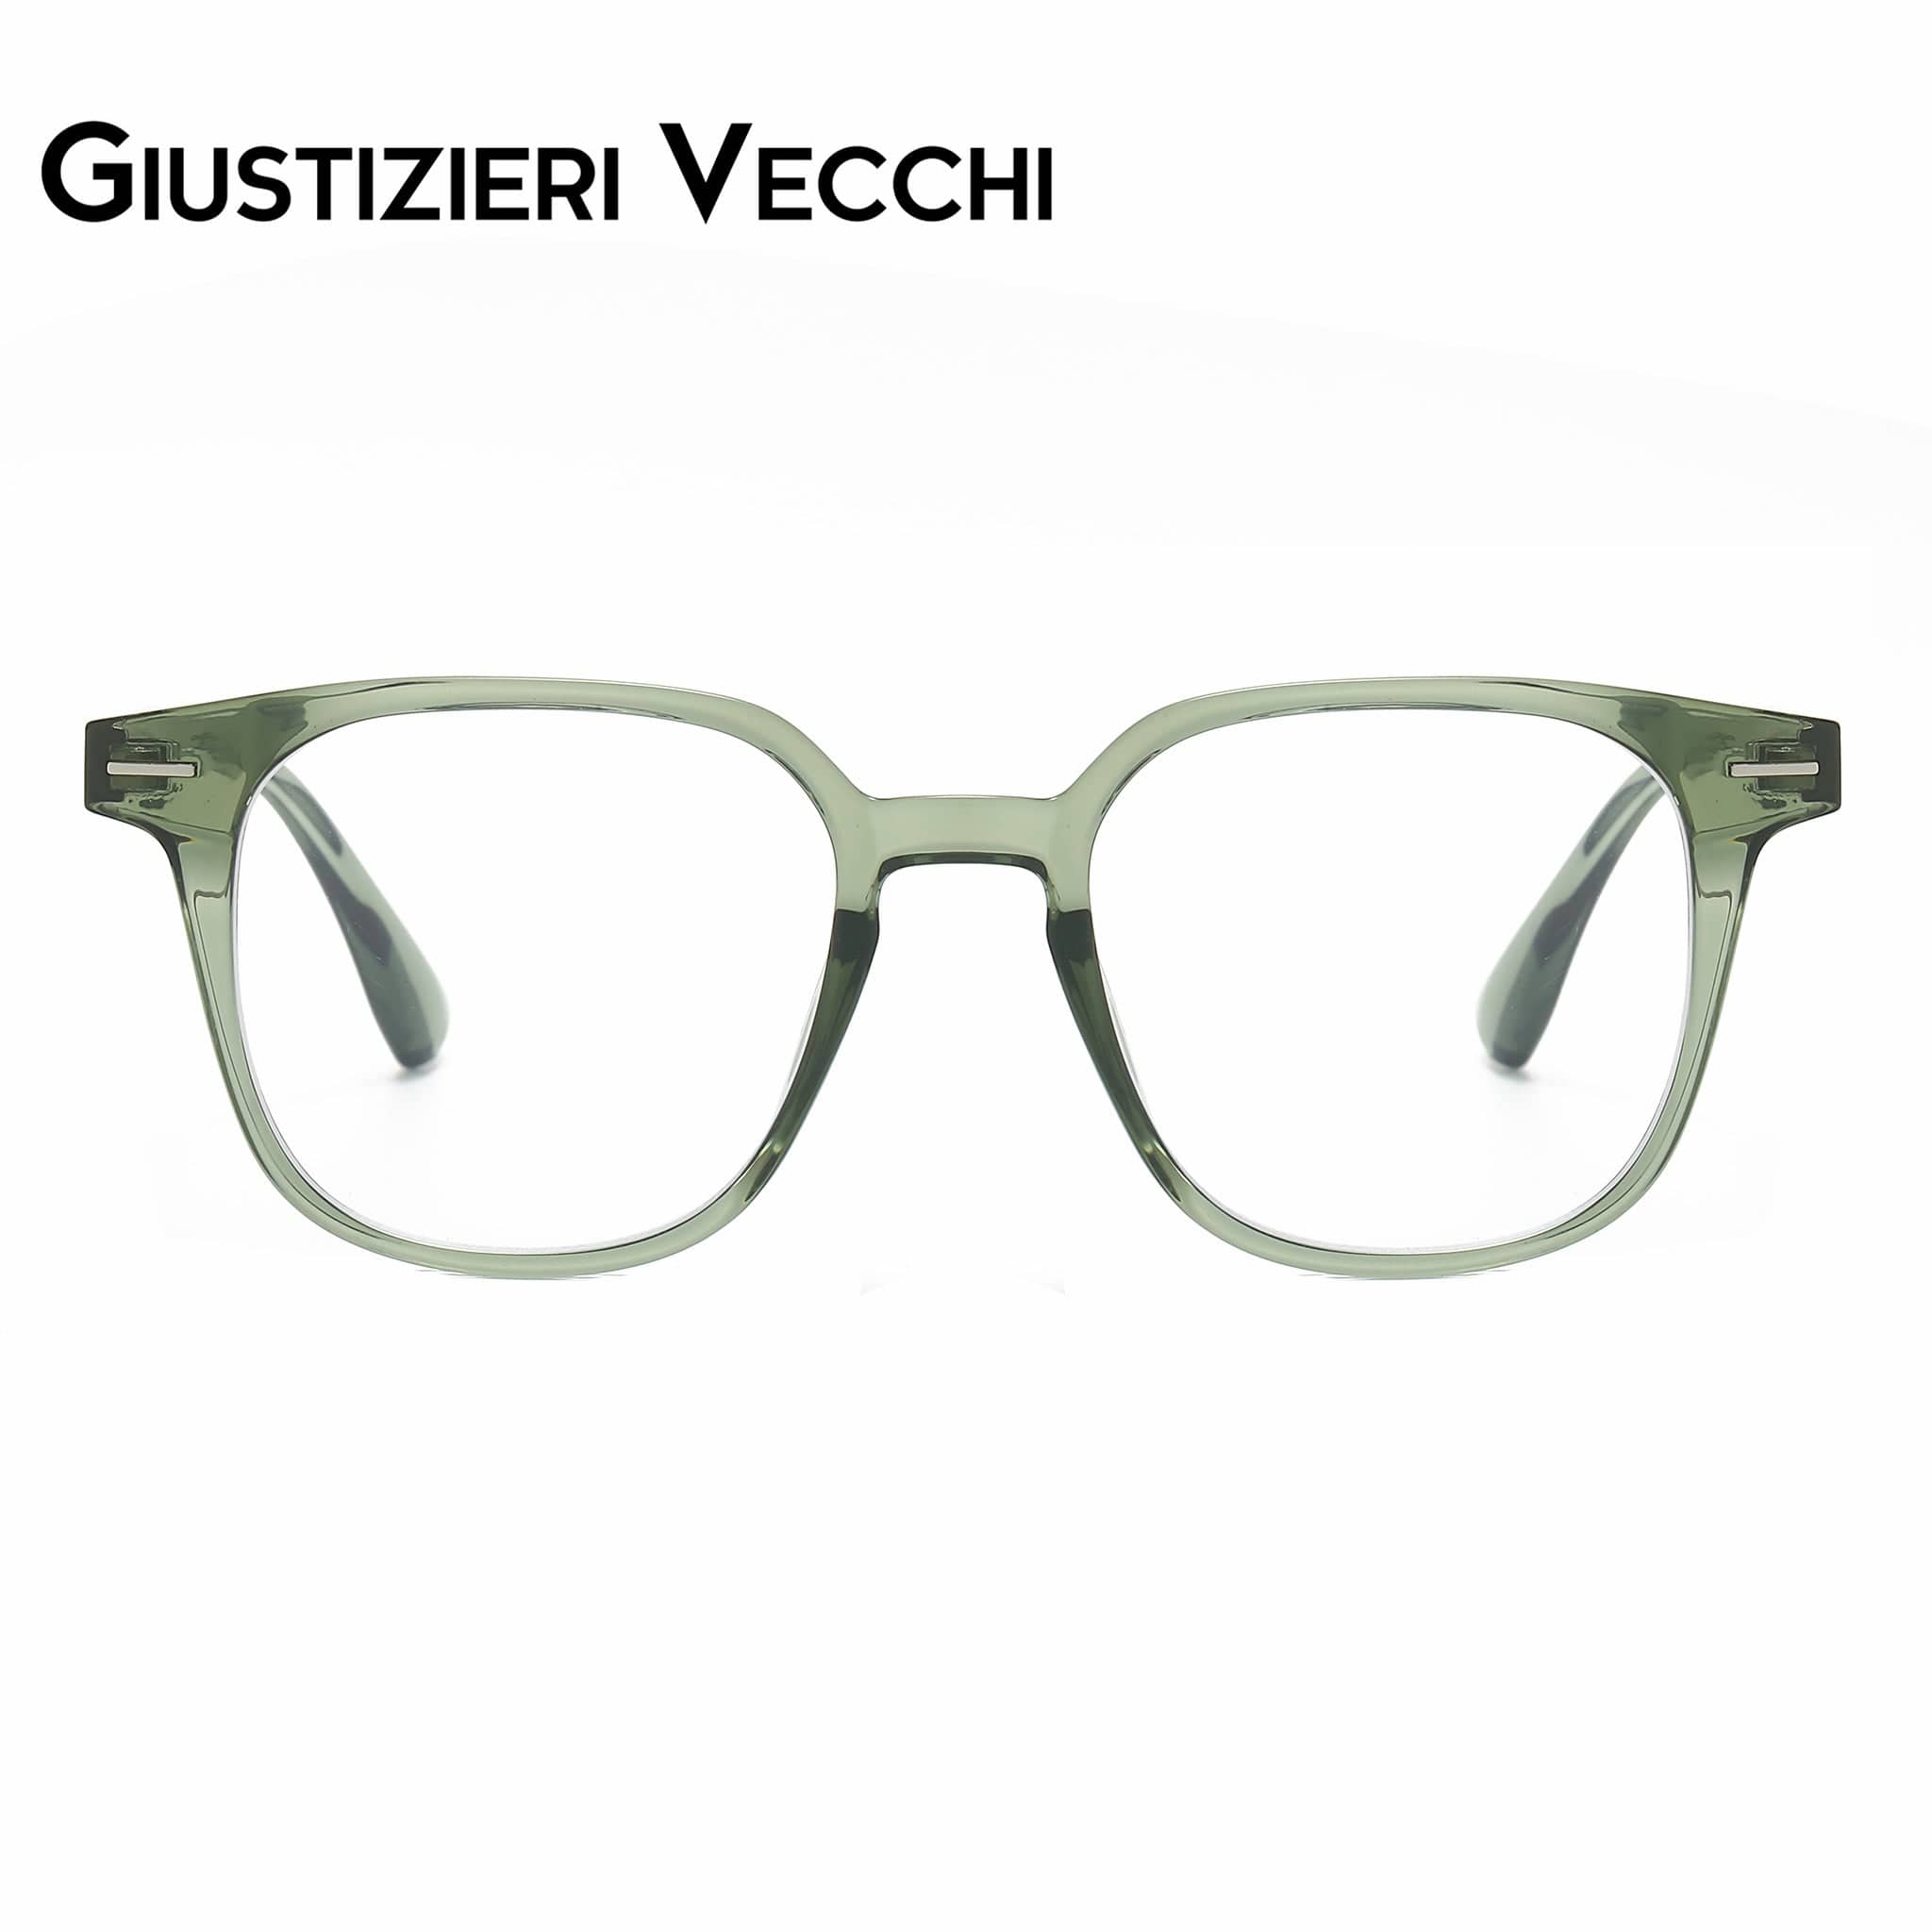 GIUSTIZIERI VECCHI Eyeglasses Small / Spring Rain Crystal IceWave Duo